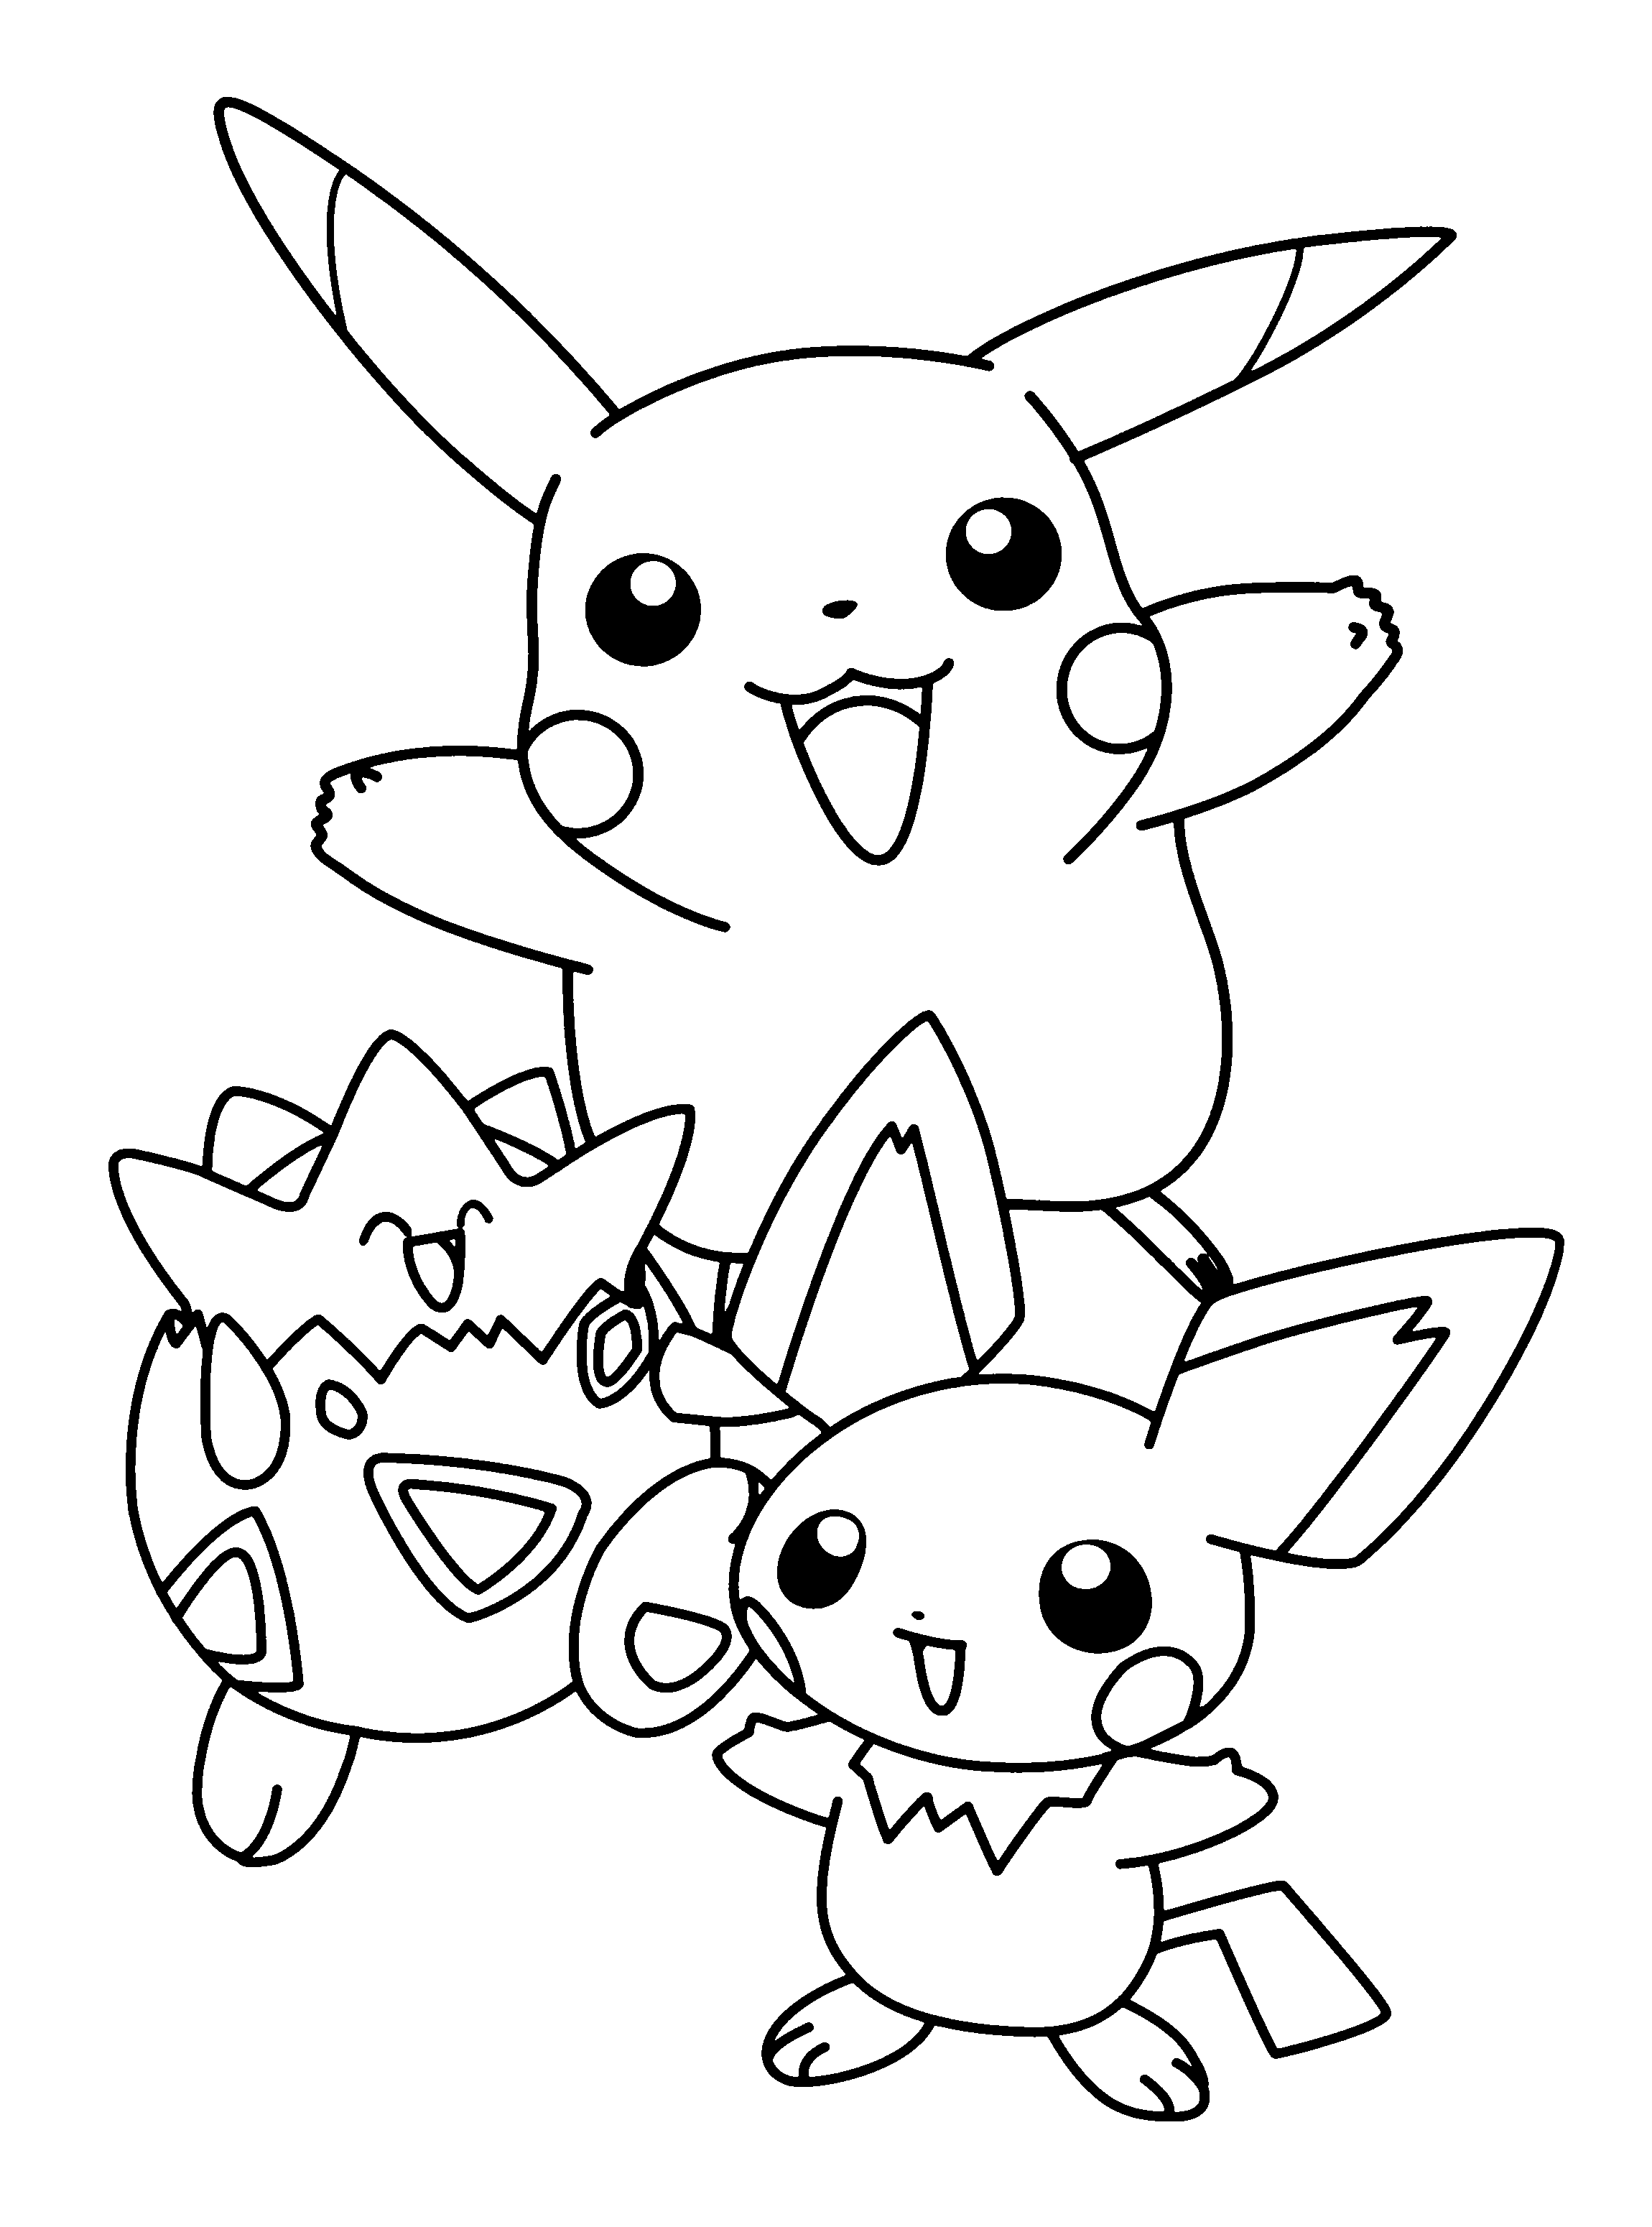 Simple Dibujos para colorear de Pokemon